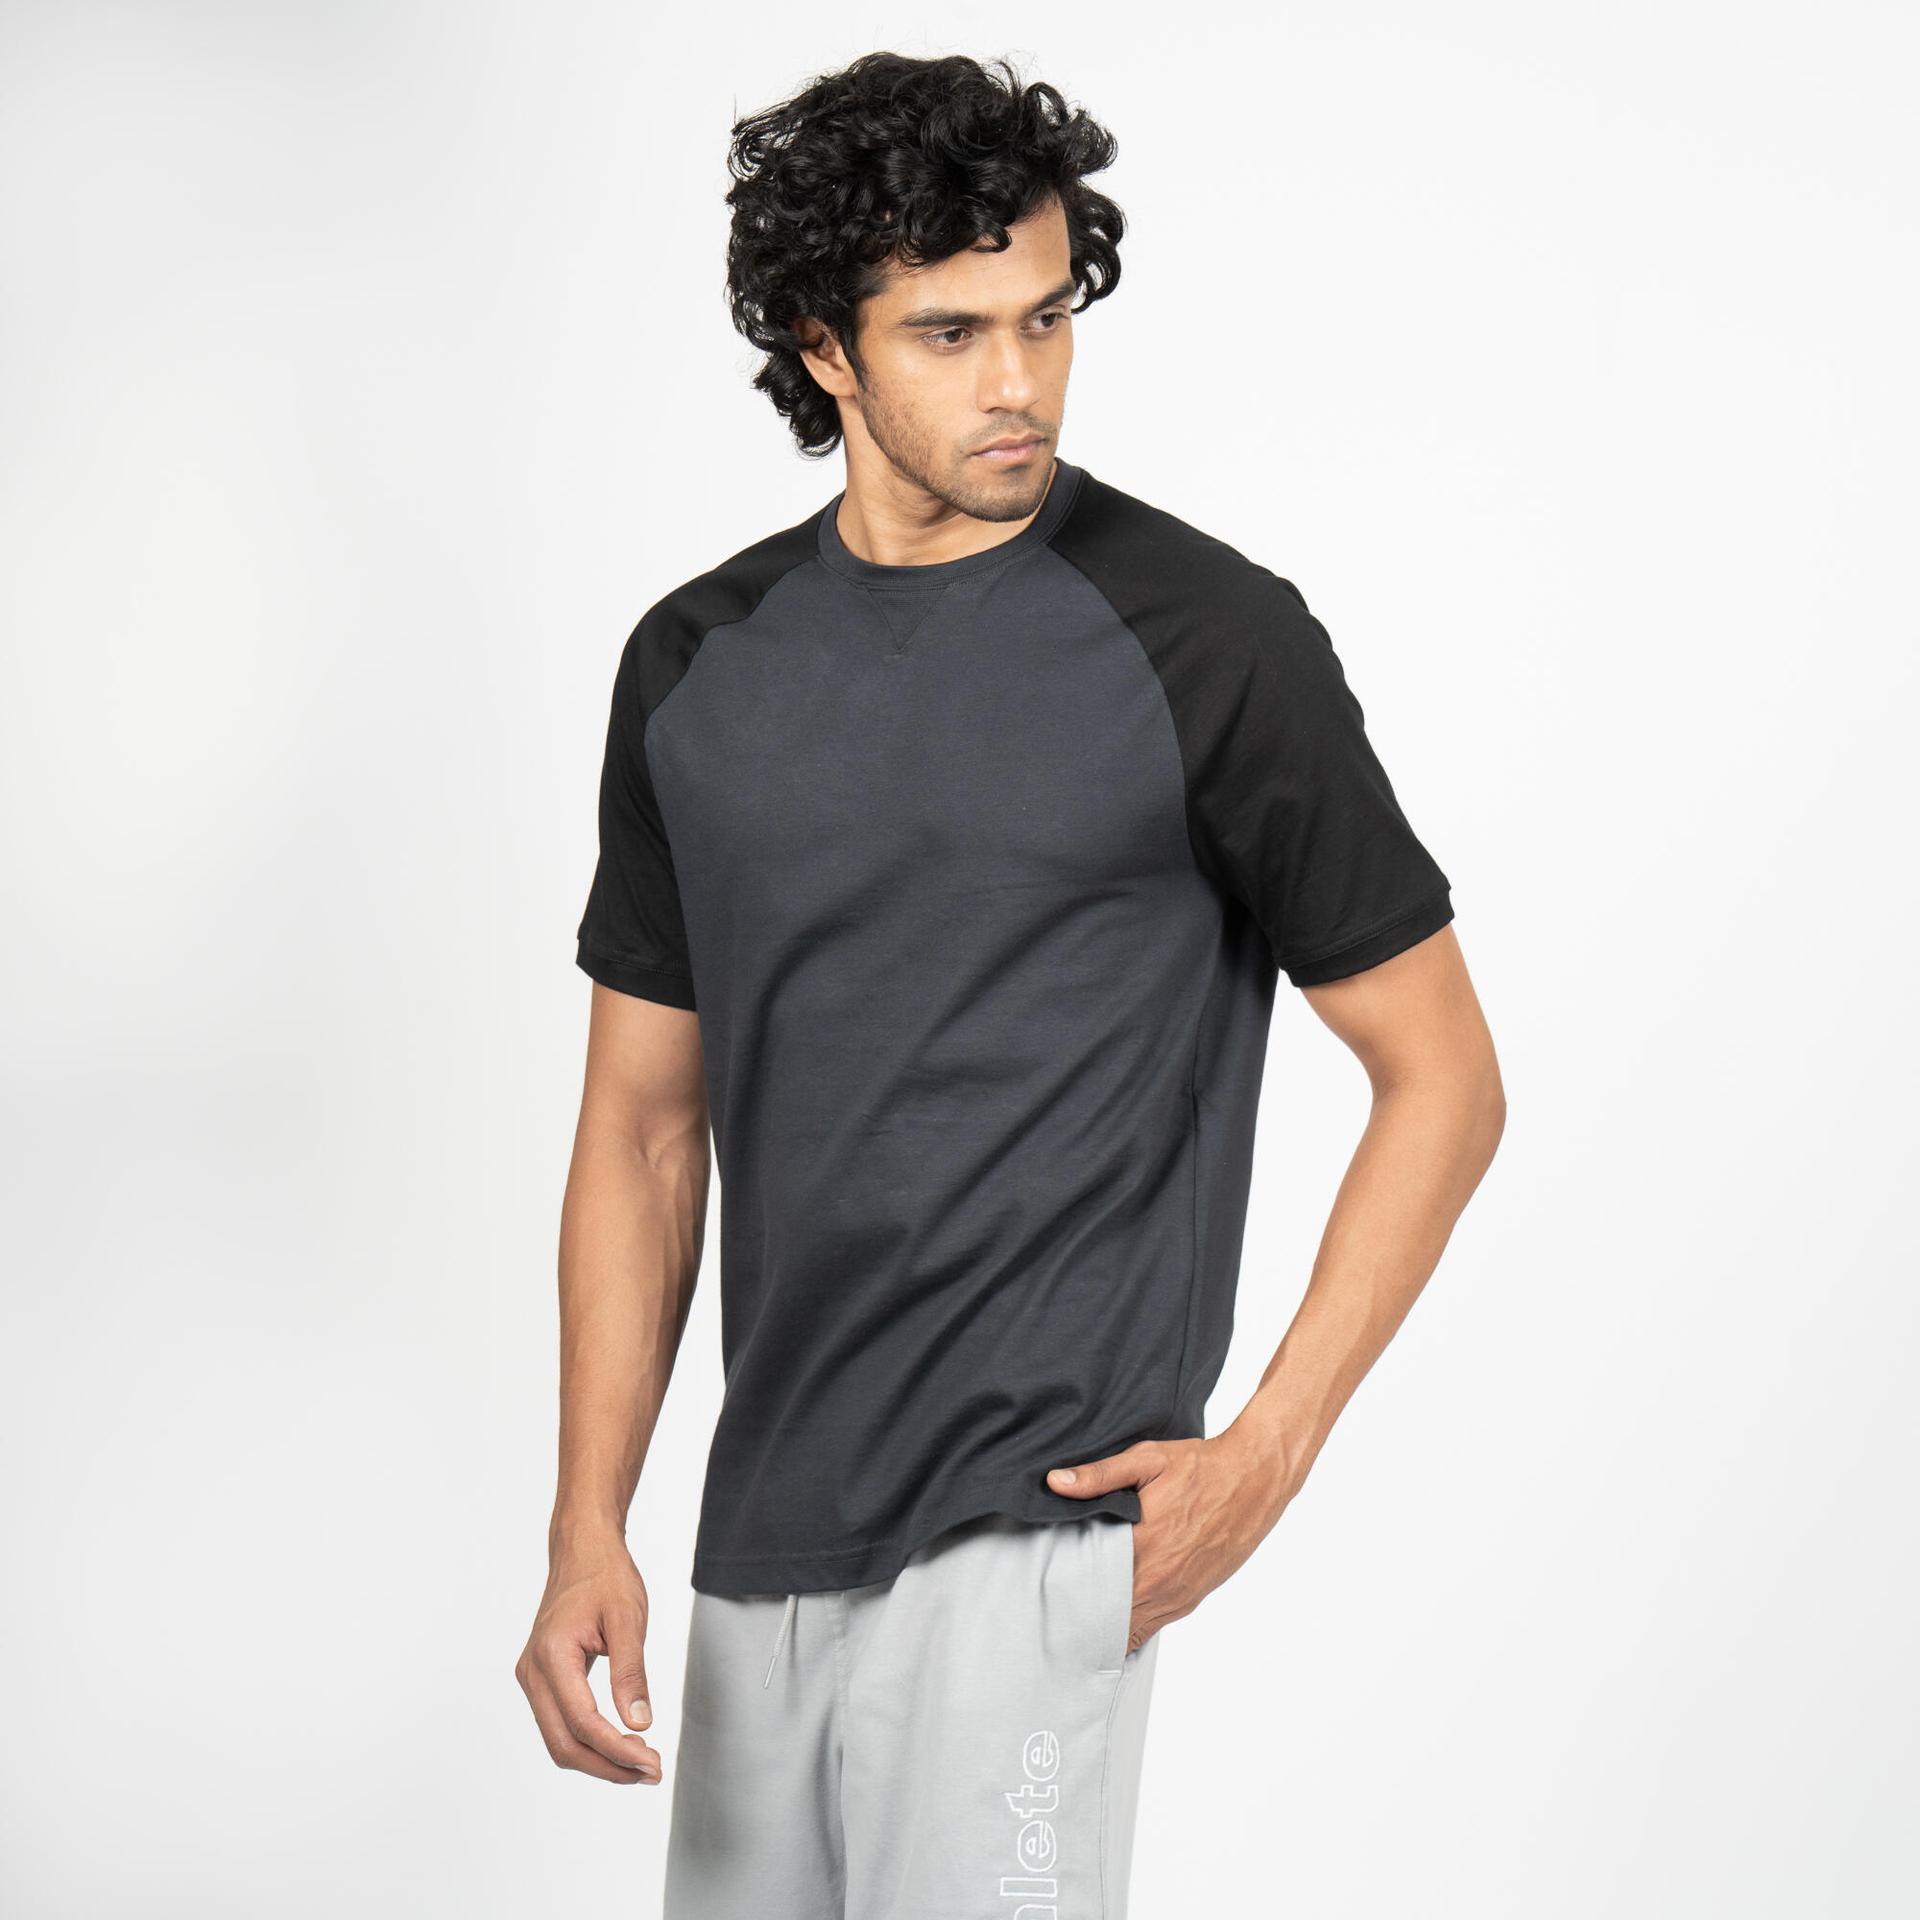 men's fitness t-shirt 520 - grey/black